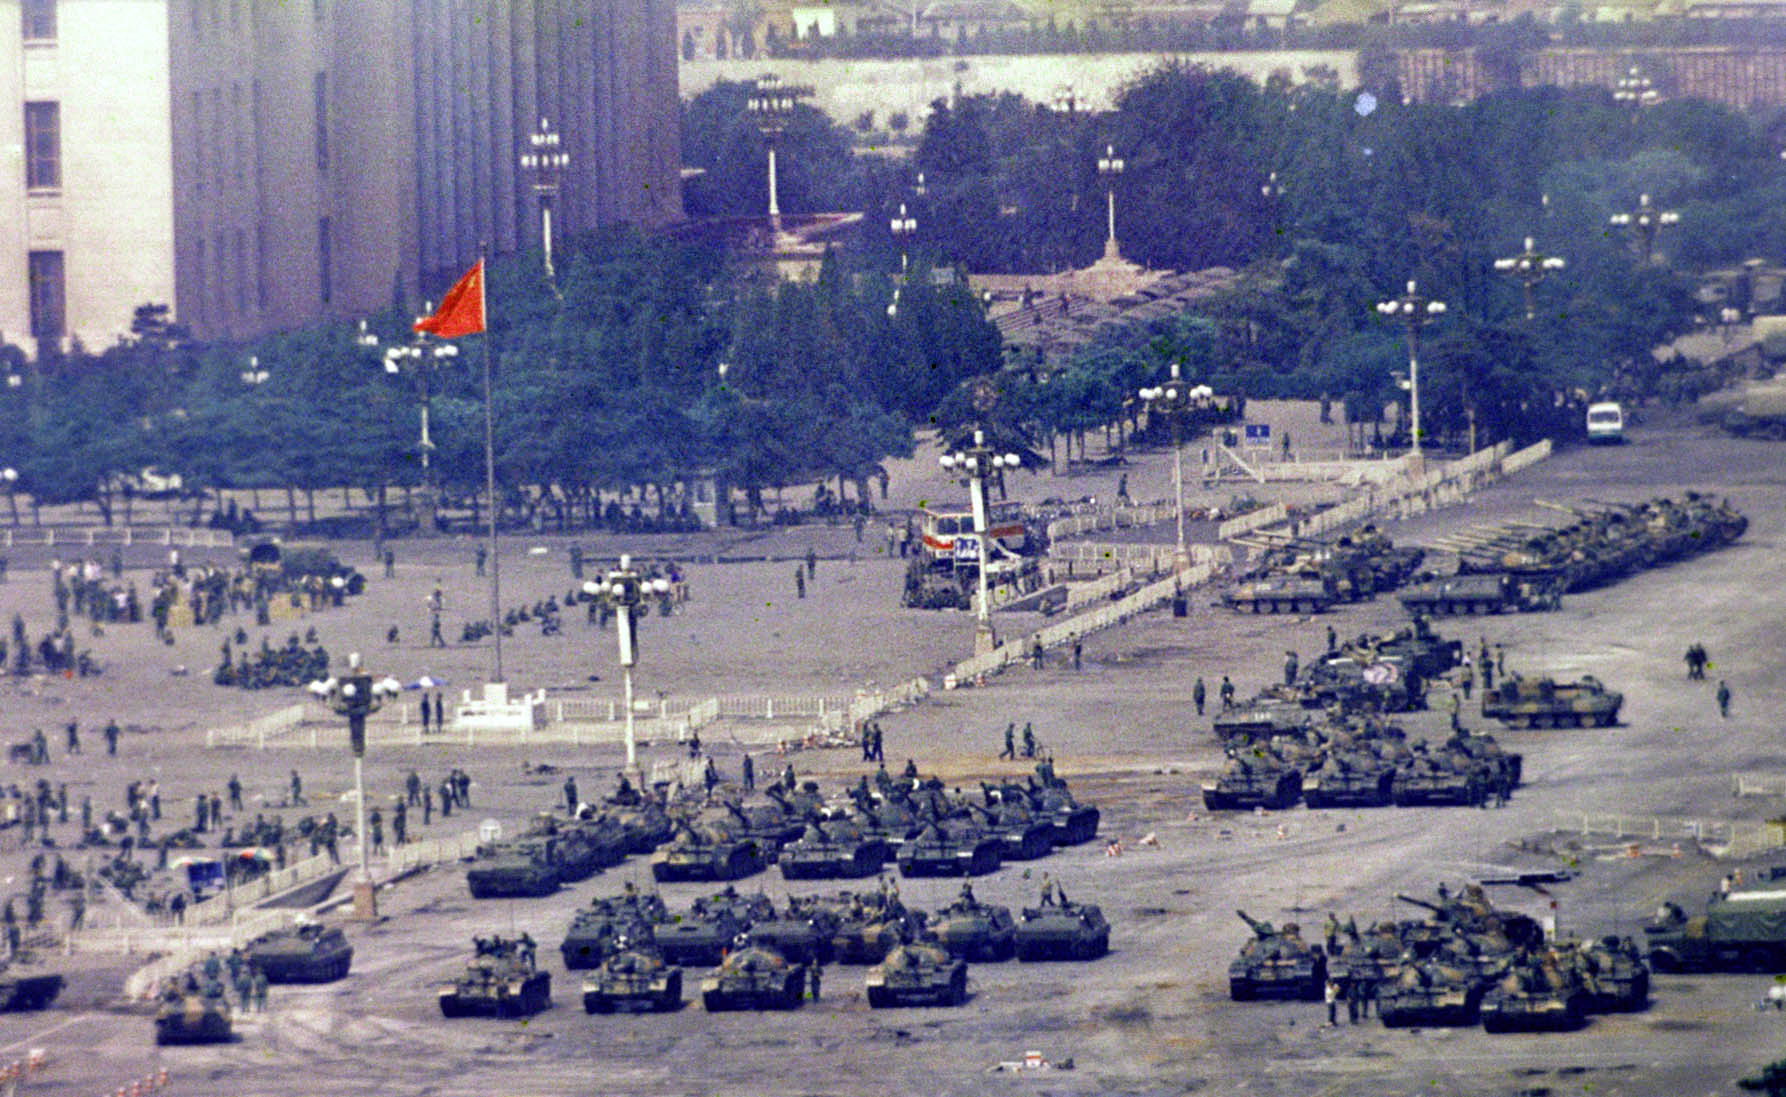 Tiananmen Square June 4 1989